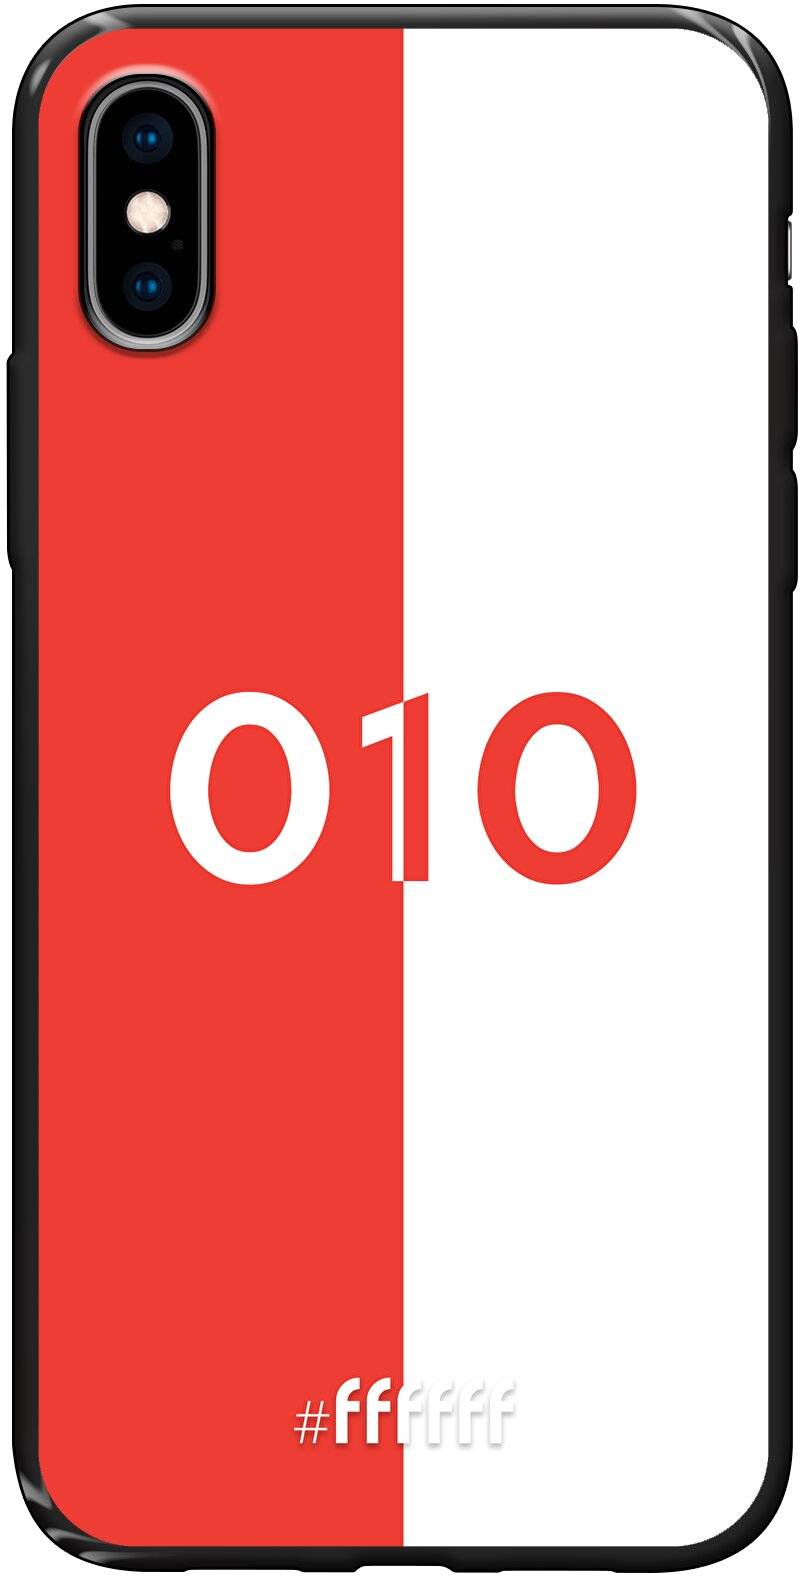 Feyenoord - 010 iPhone X